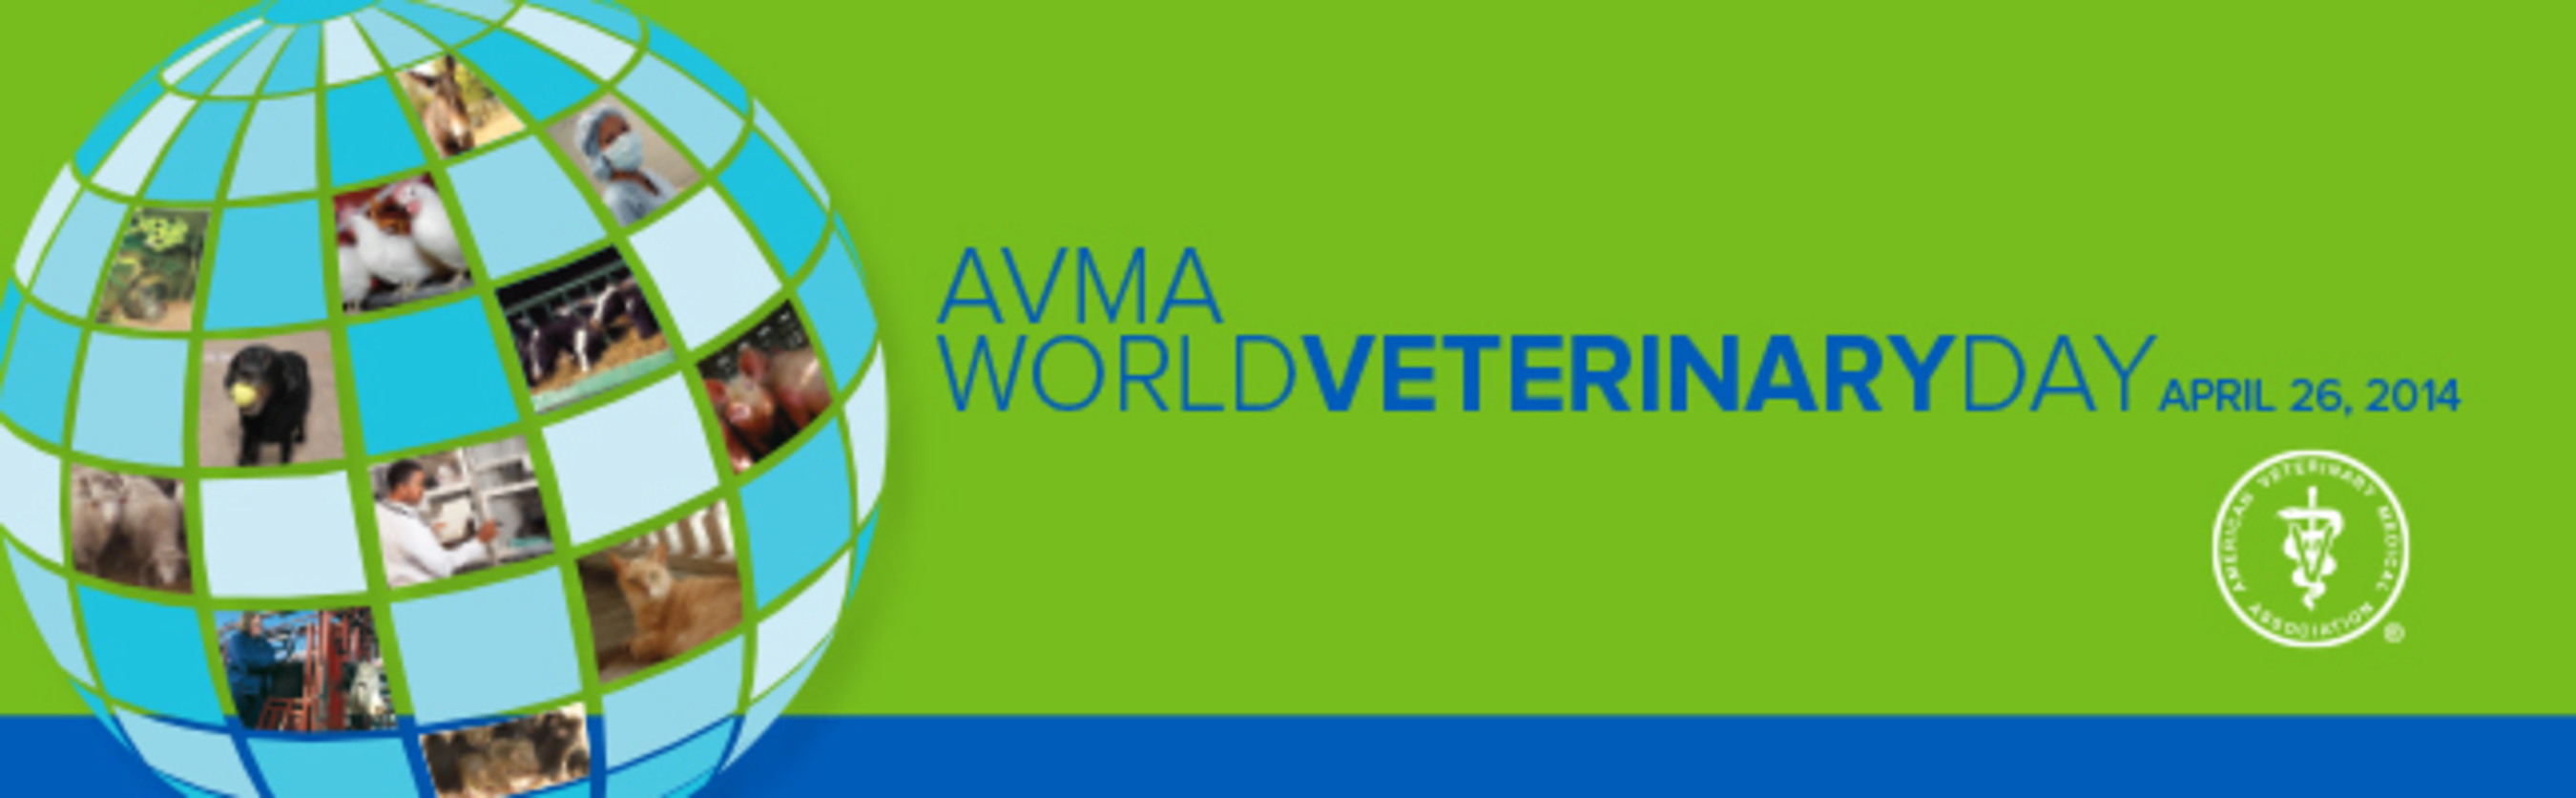 AVMA Celebrates World Veterinary Day! April 26, 2014  (PRNewsFoto/AVMA)